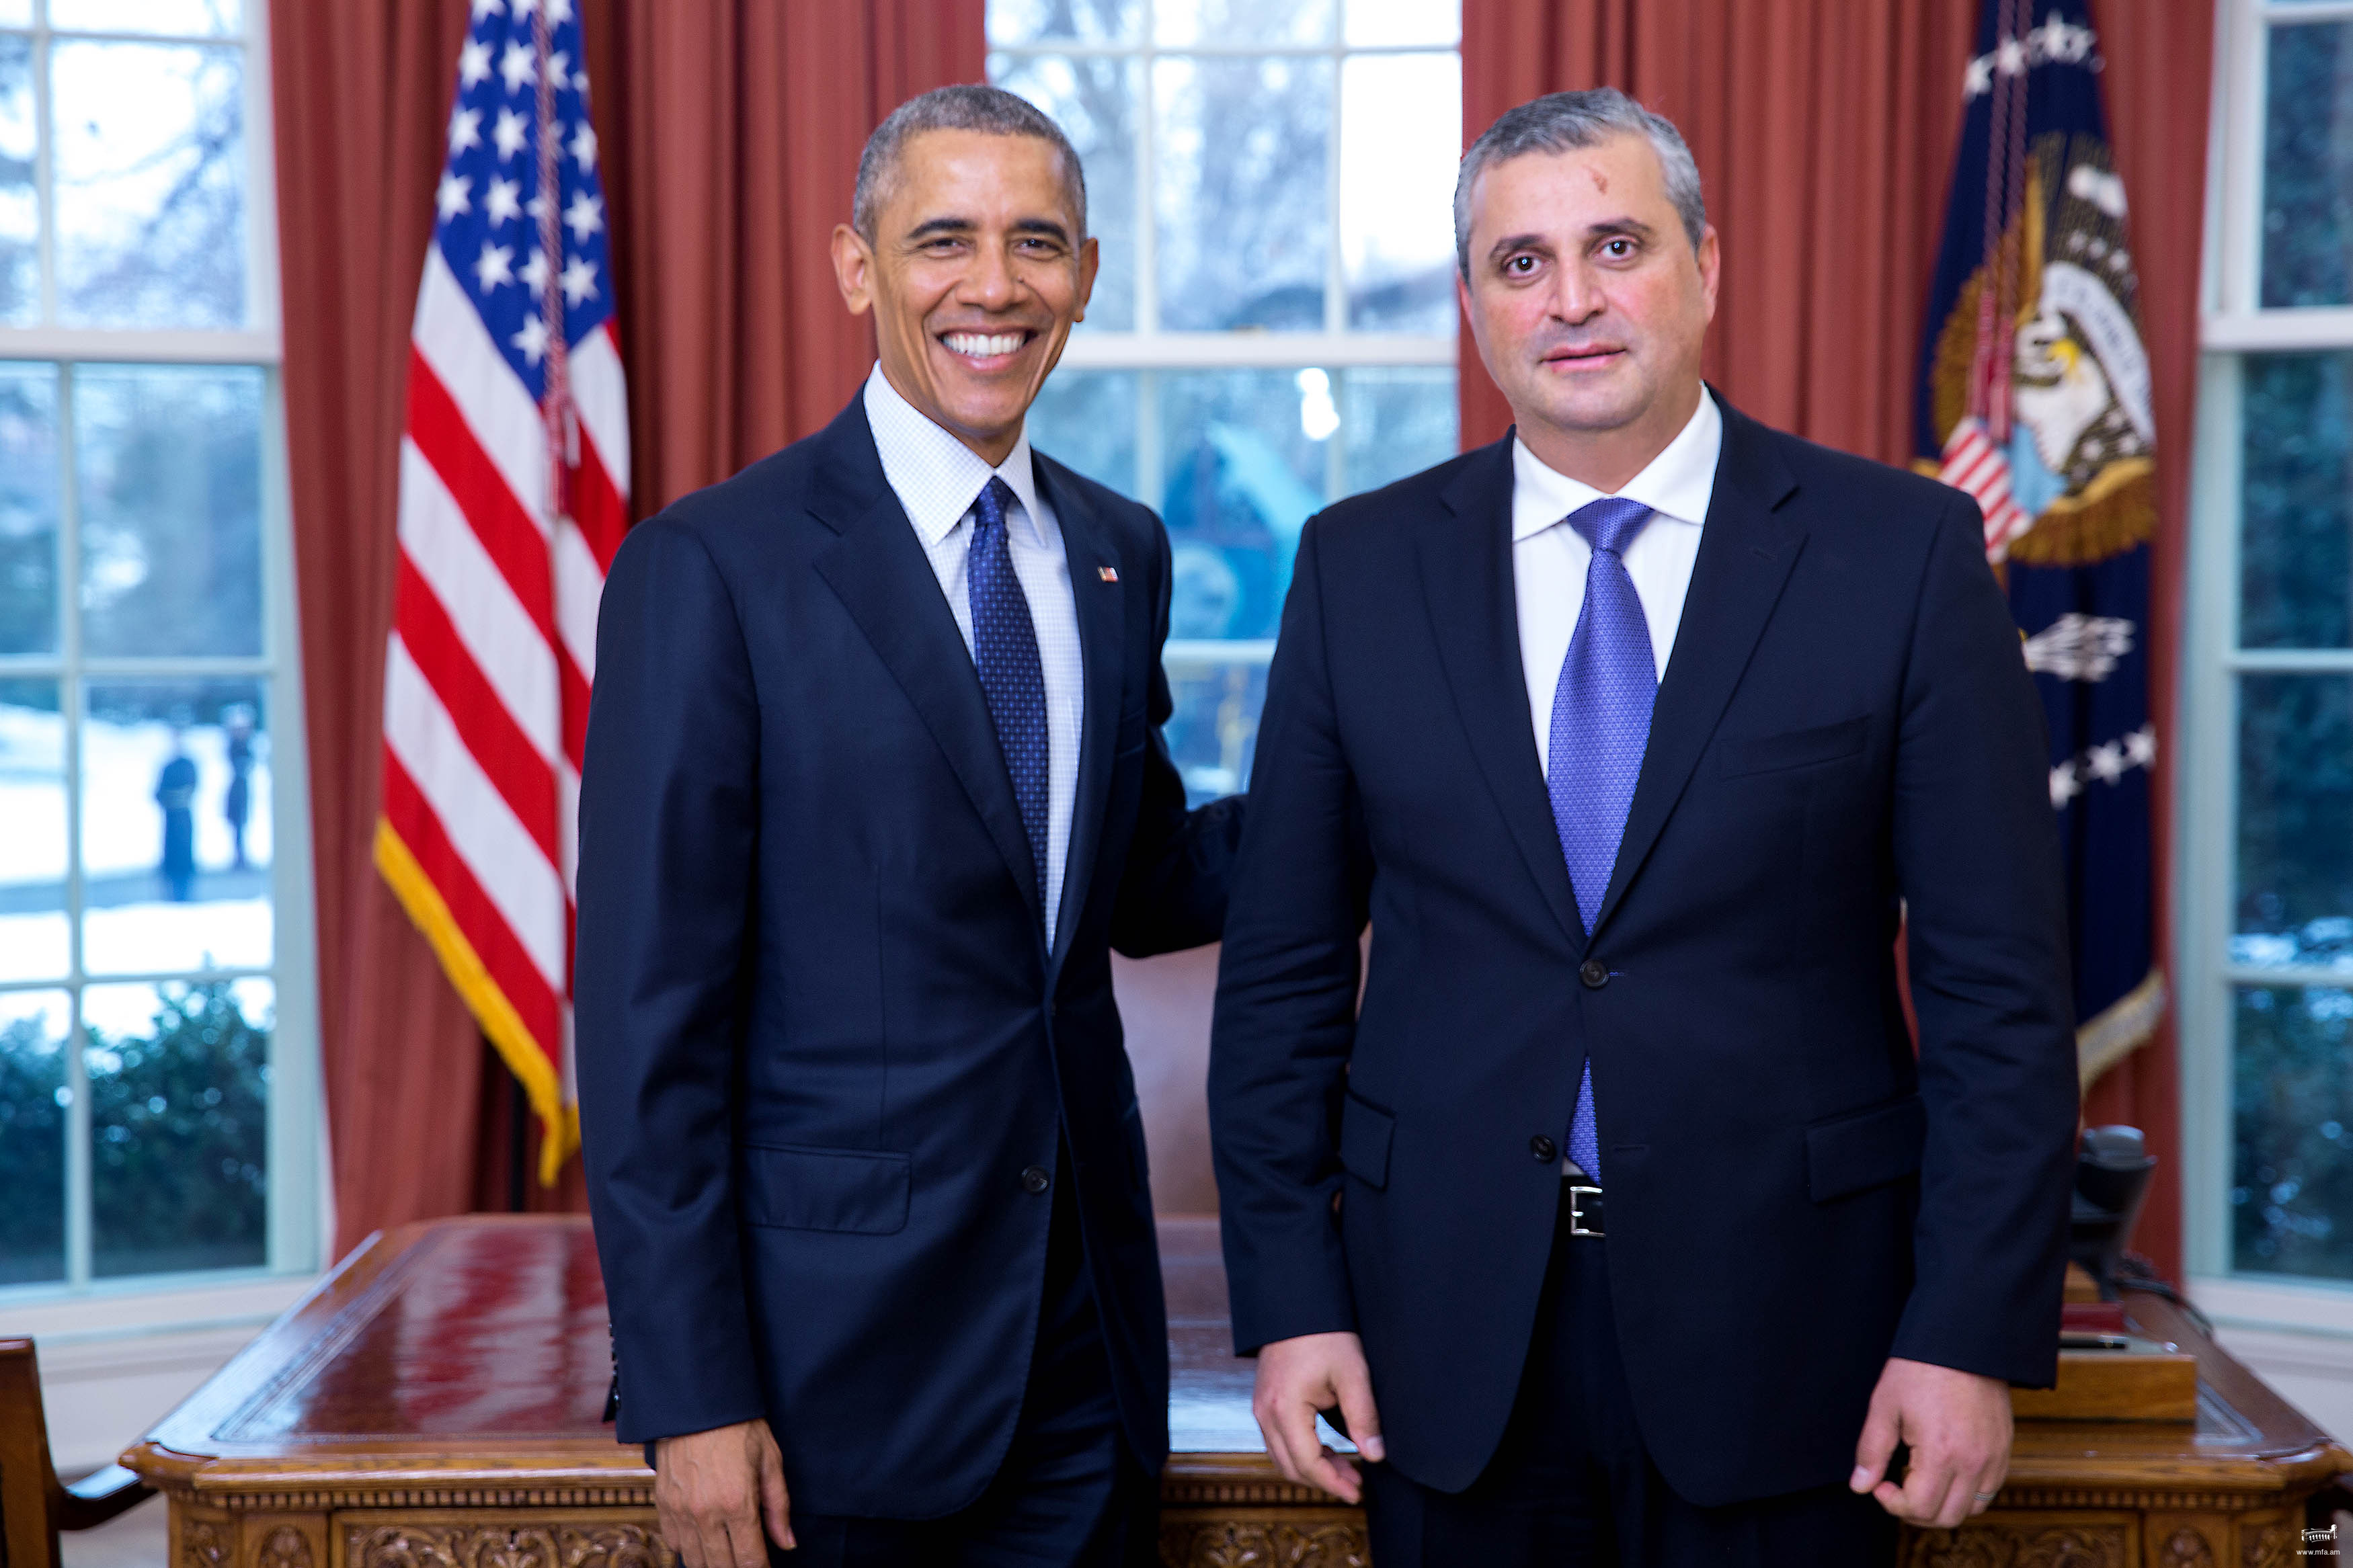 Ambassador Hovhannissian presented his credentials to the U.S. President Barack Obama